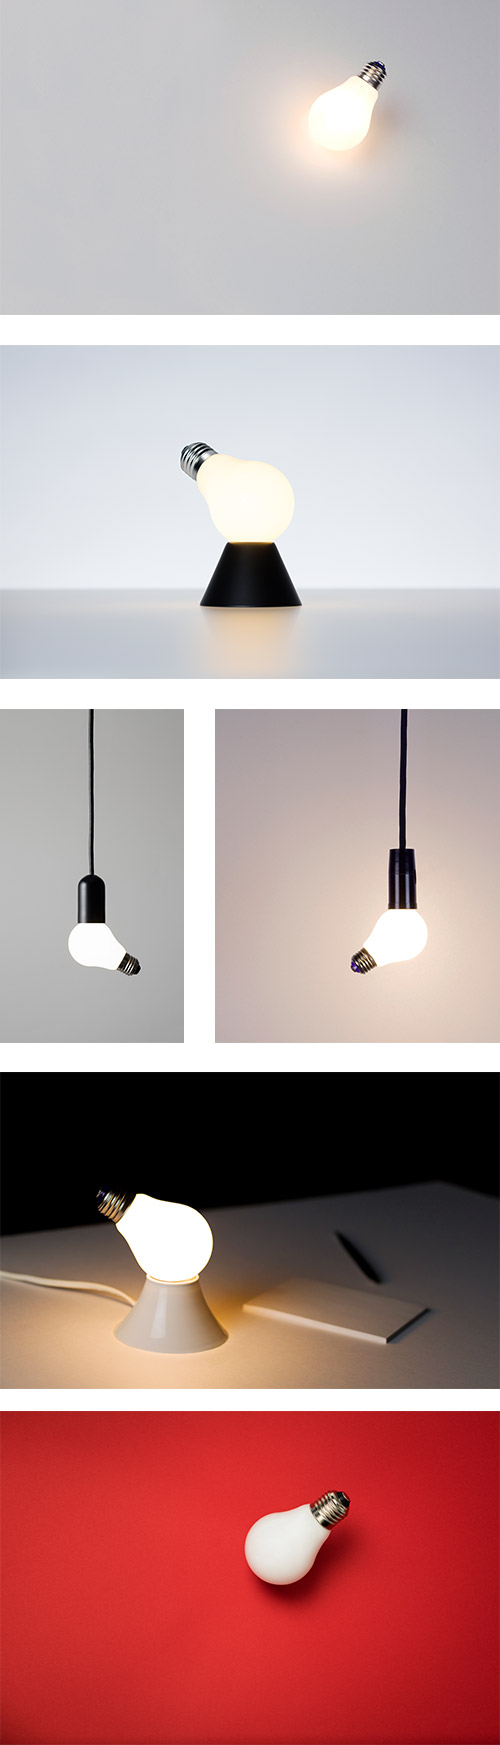 【4/16~4/22精選品牌9折優惠】日本 Perrocaliente Lamp/Lamp LED燈泡 黃光